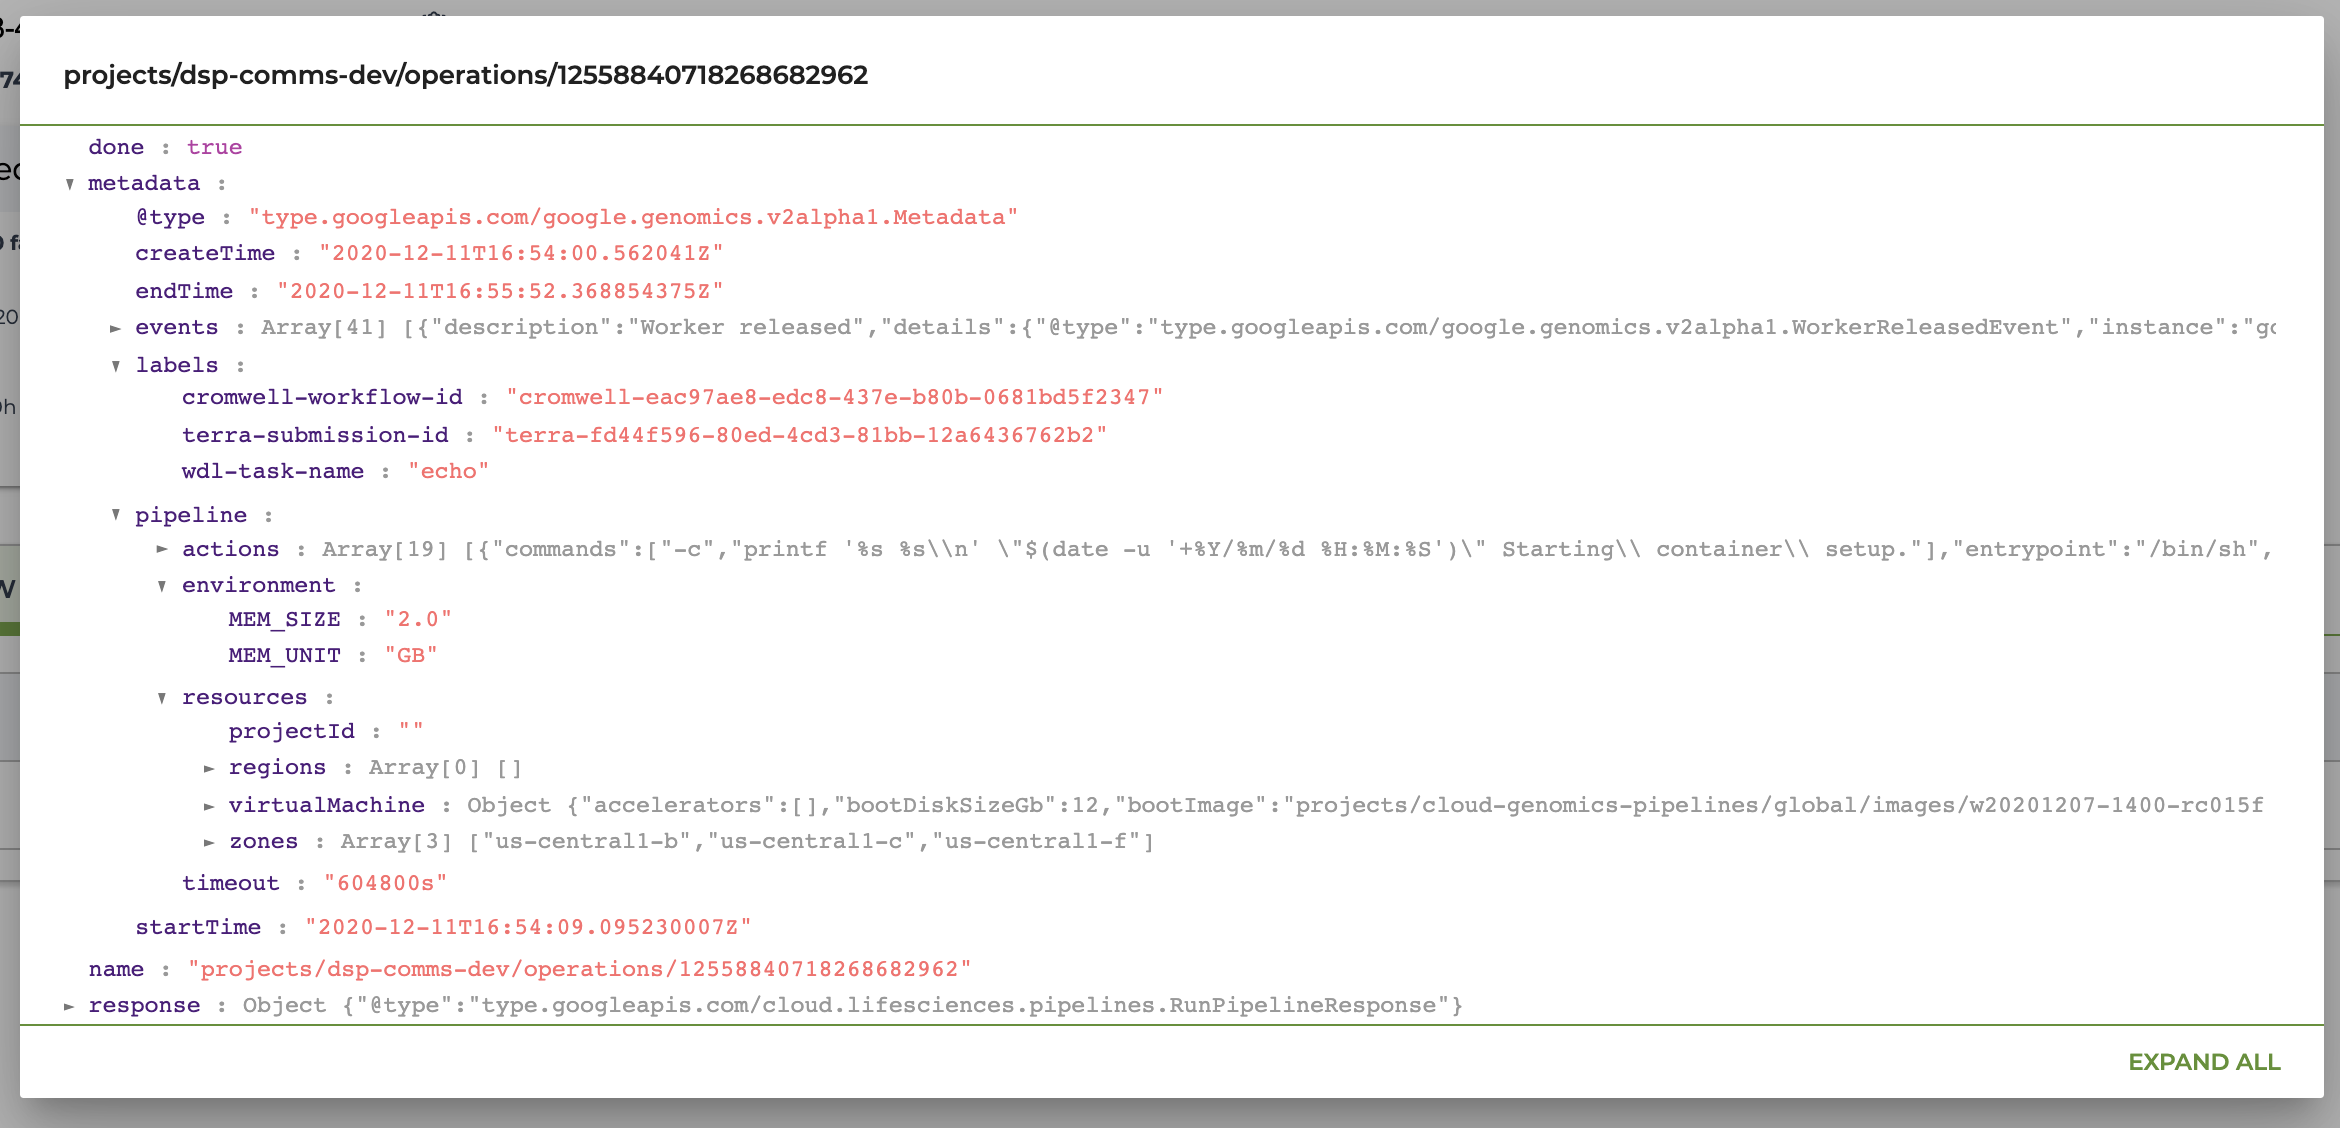 Troubleshooting-TaskName-log-in-UI_Screen_shot.png